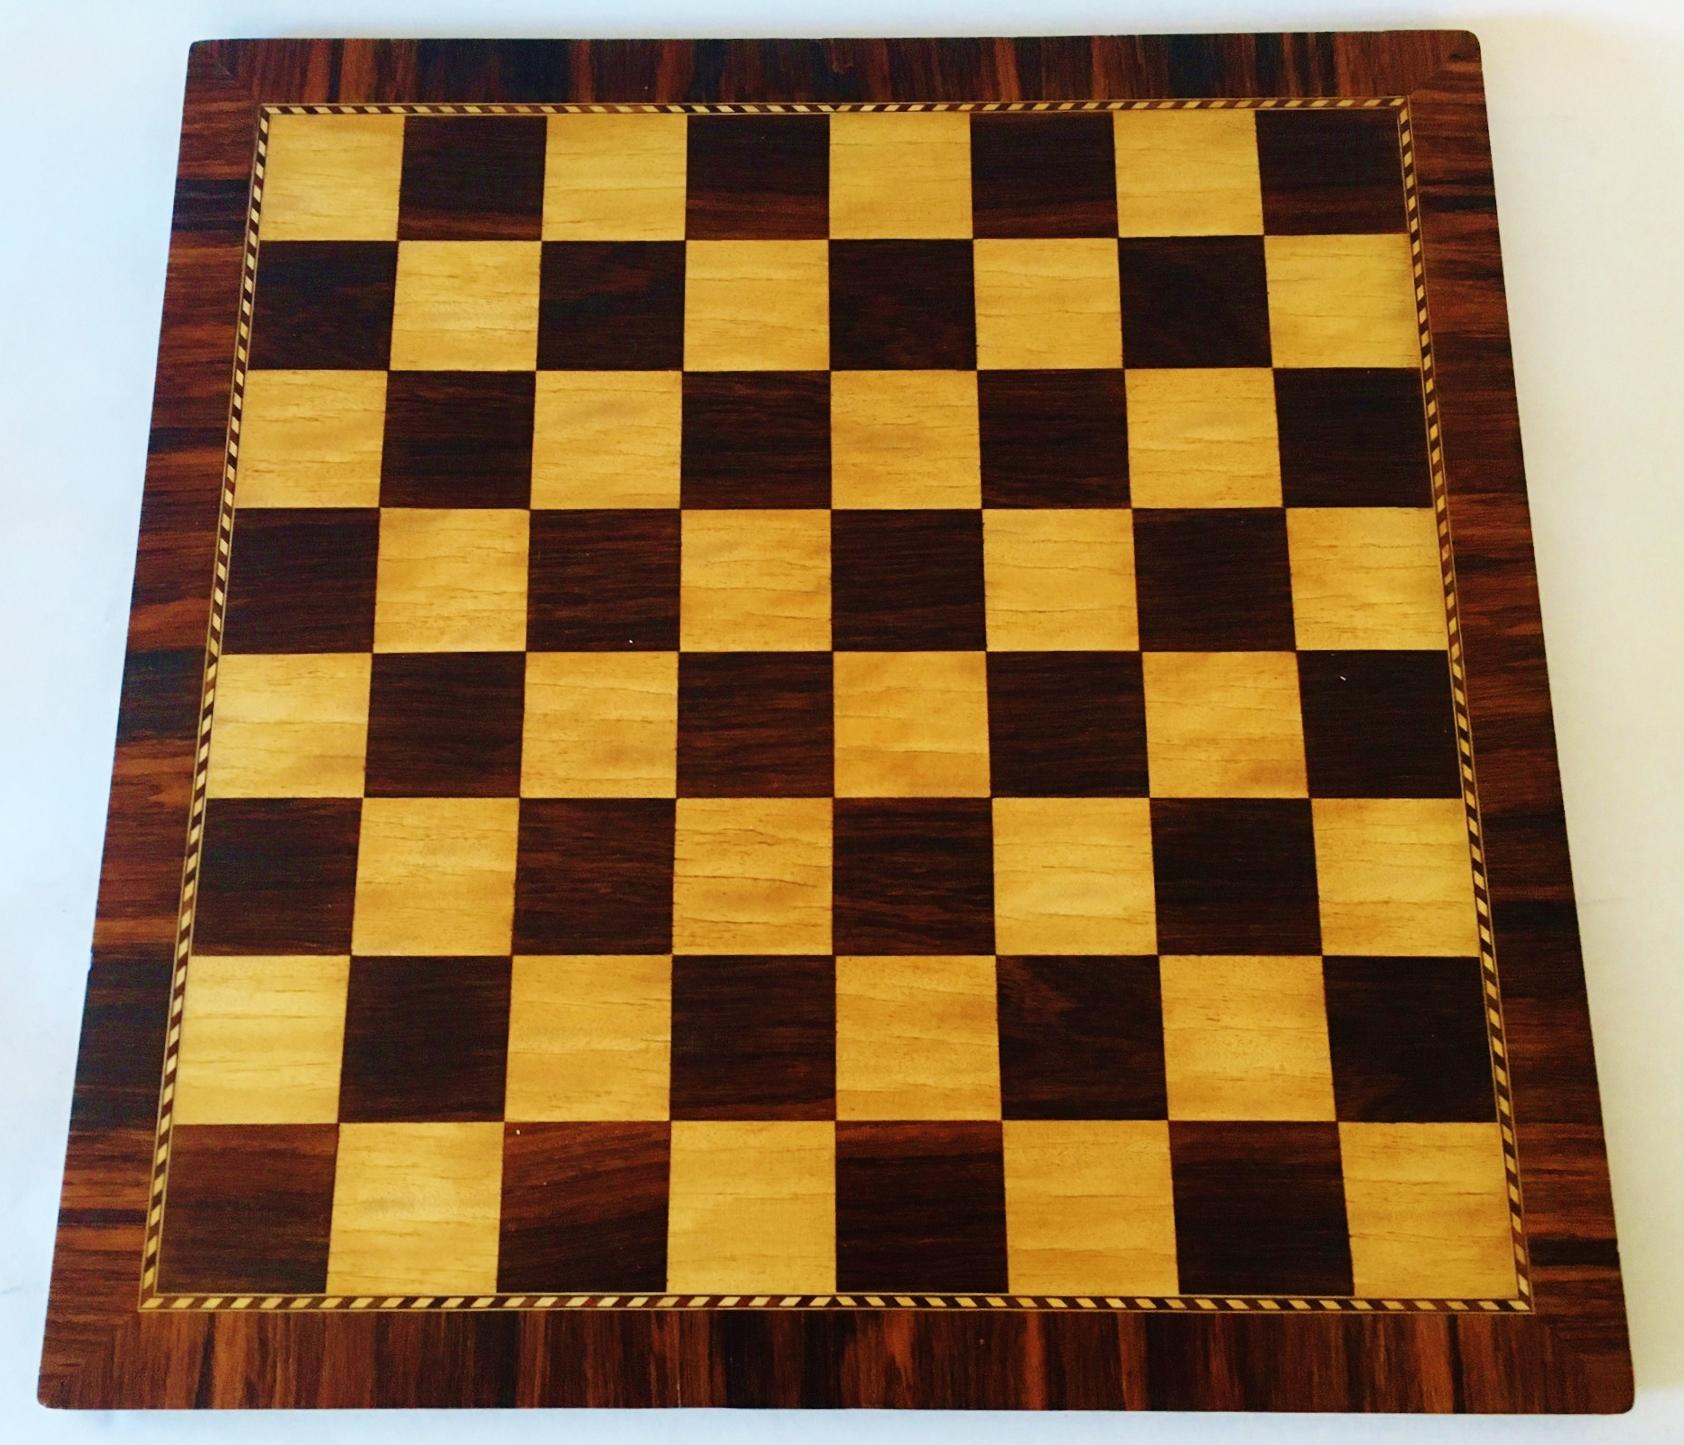 geometric chess pieces